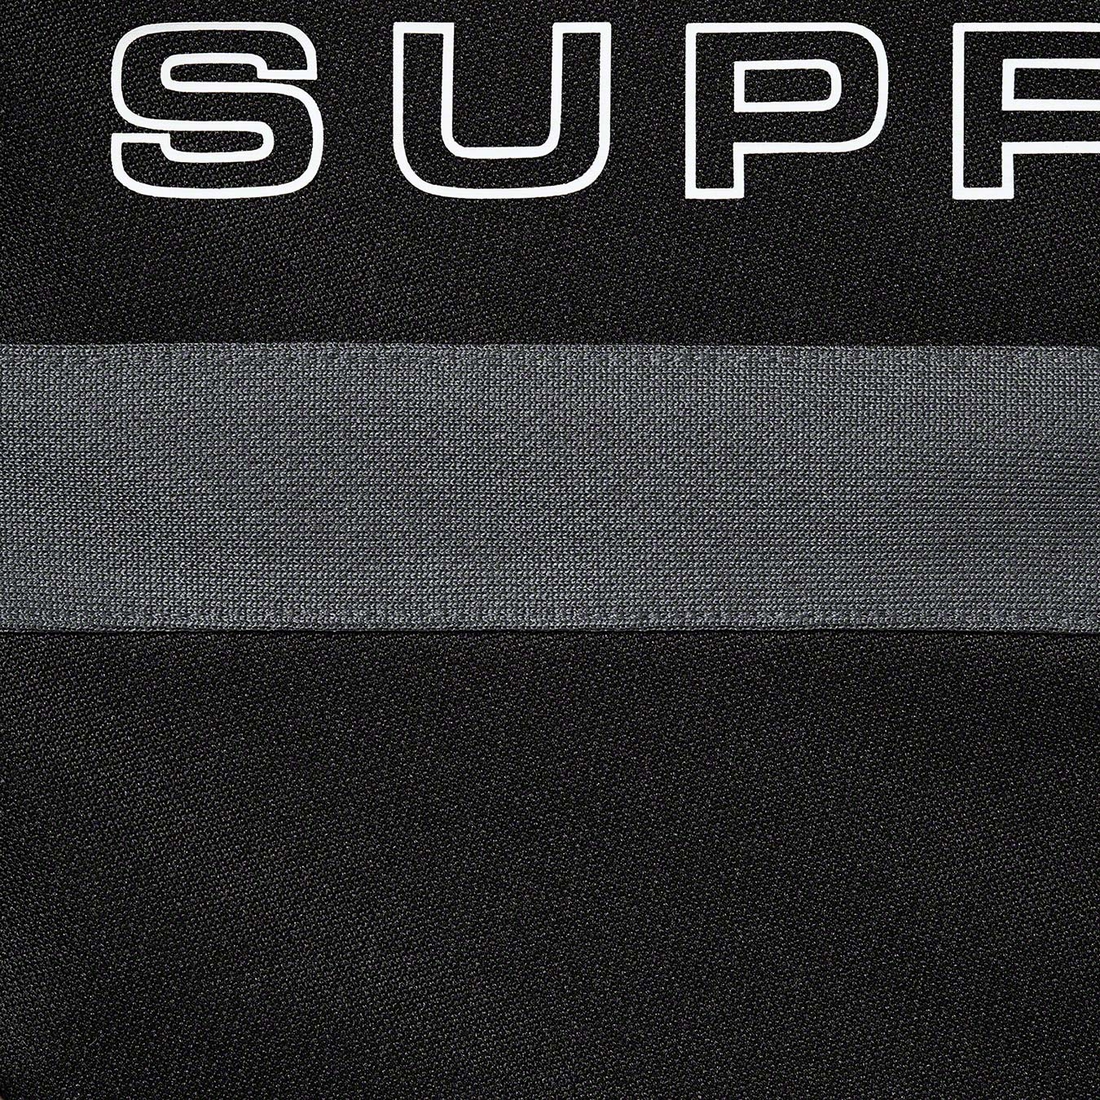 Details on Supreme Umbro Snap Sleeve Jacket Black from spring summer 2023 (Price is $188)